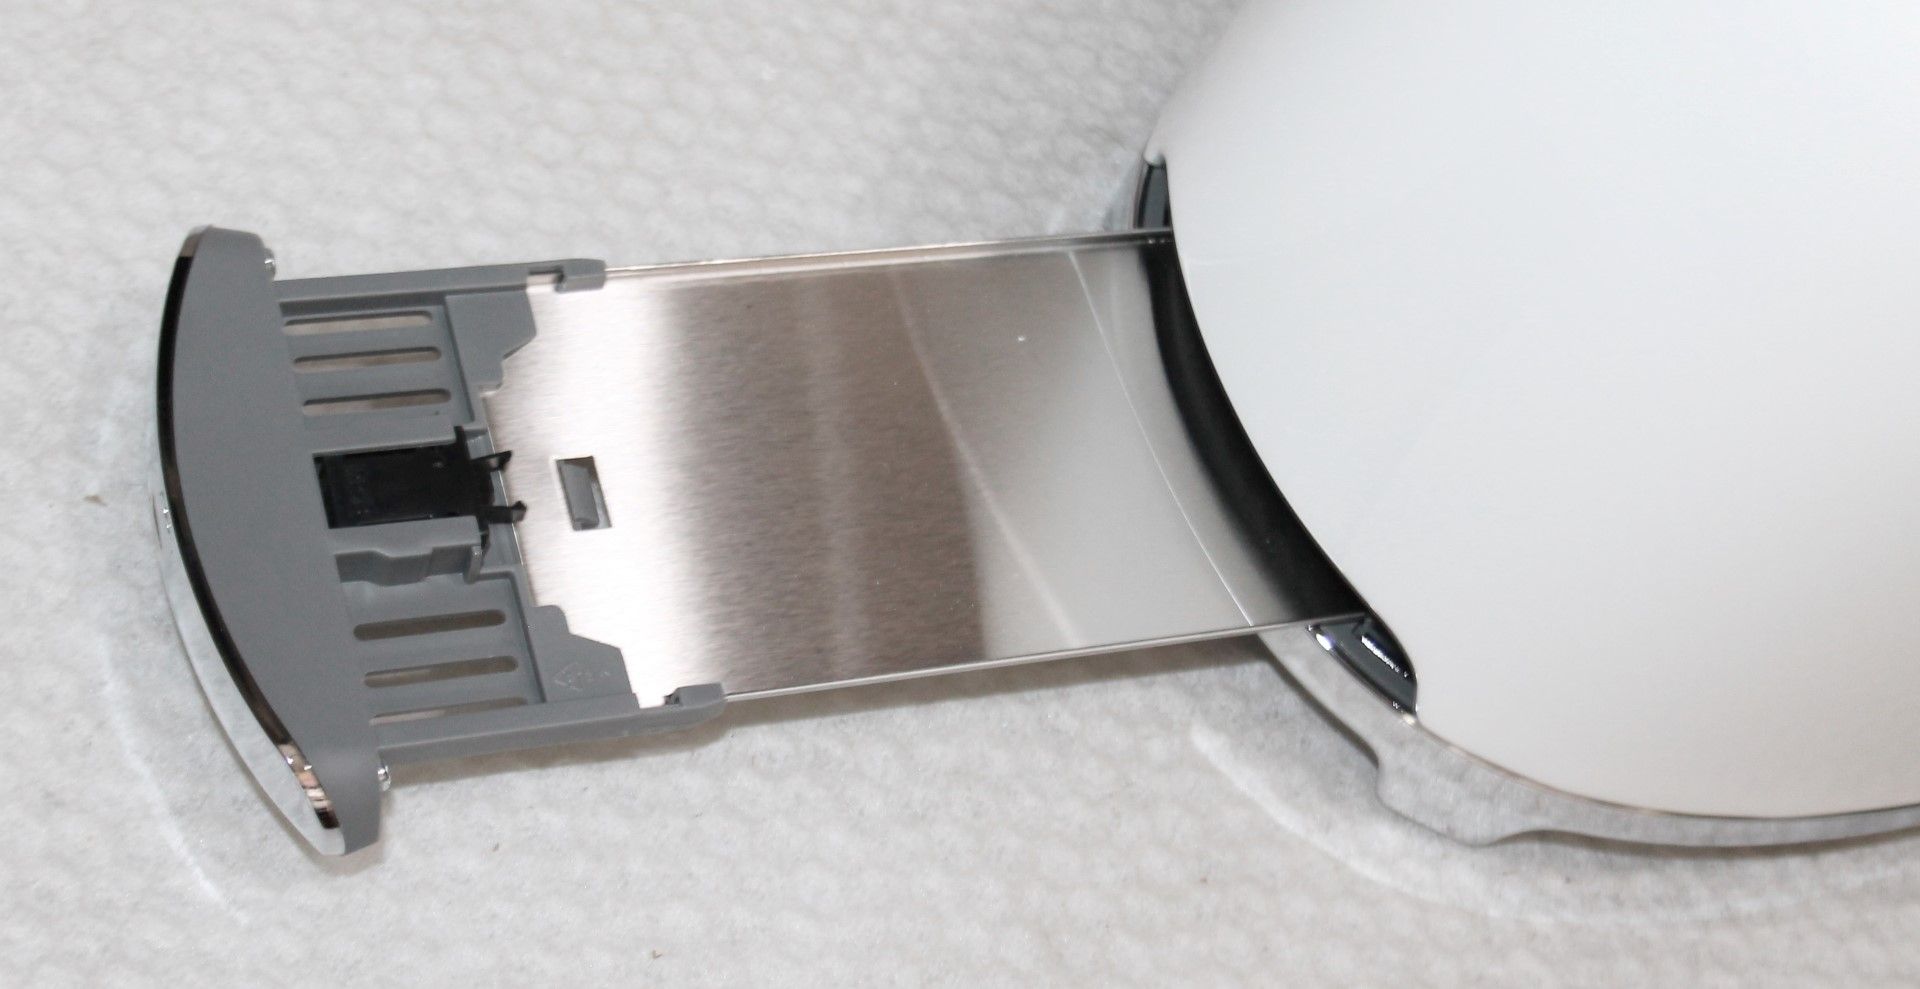 1 x SMEG Retro-Style 2-Slice Toaster In Gloss White & Chrome - Original RRP £179.95 *Please Read - Image 3 of 8